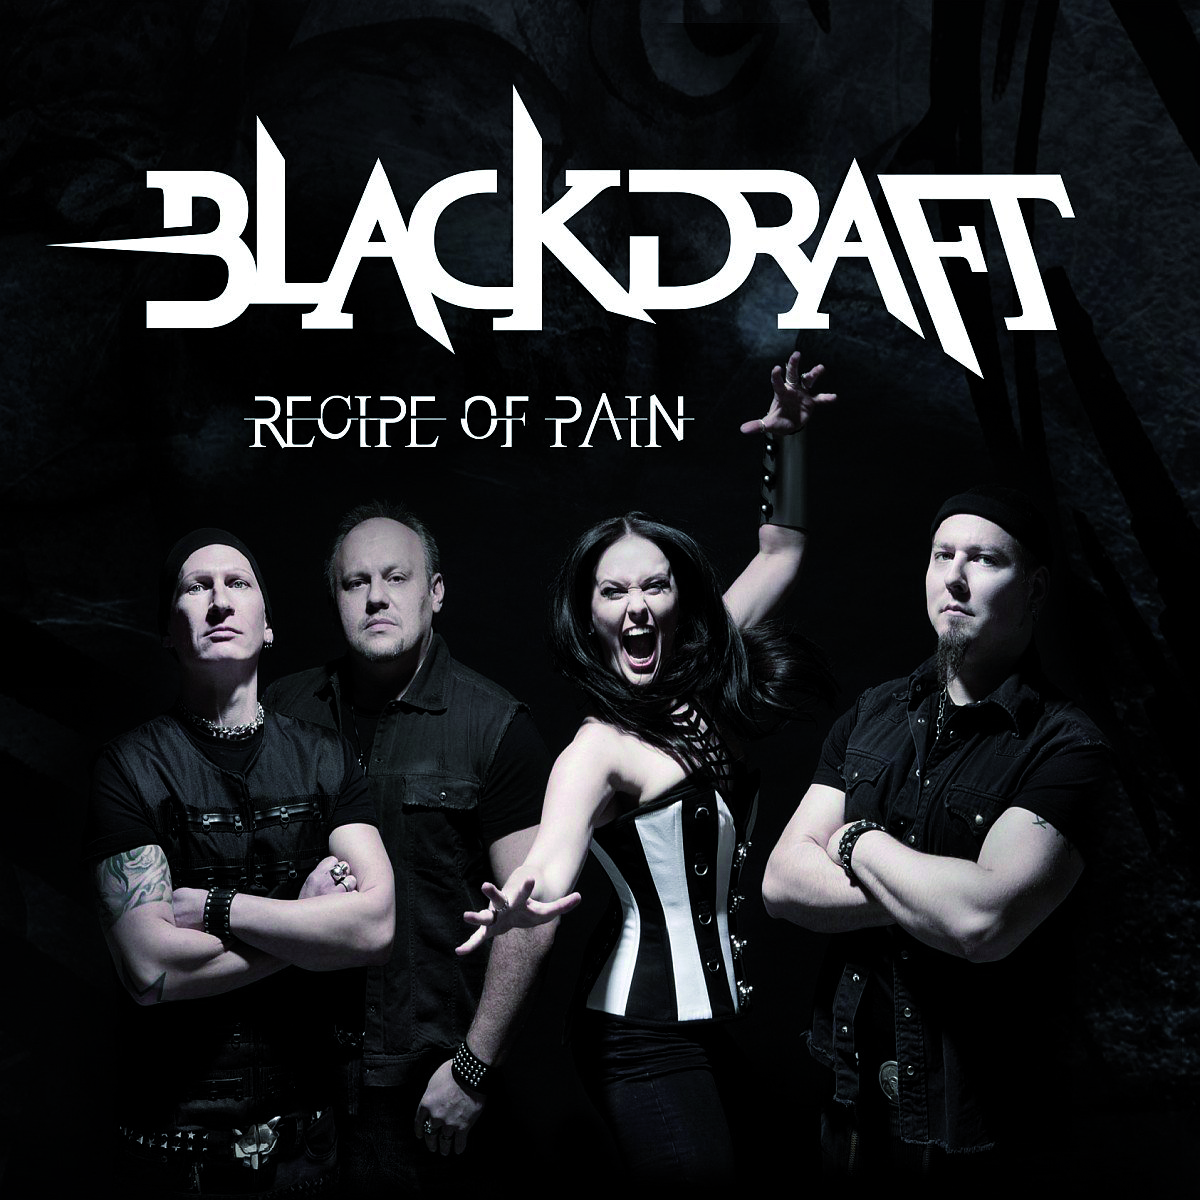 Blackdraft (De) – Recipe Of Pain